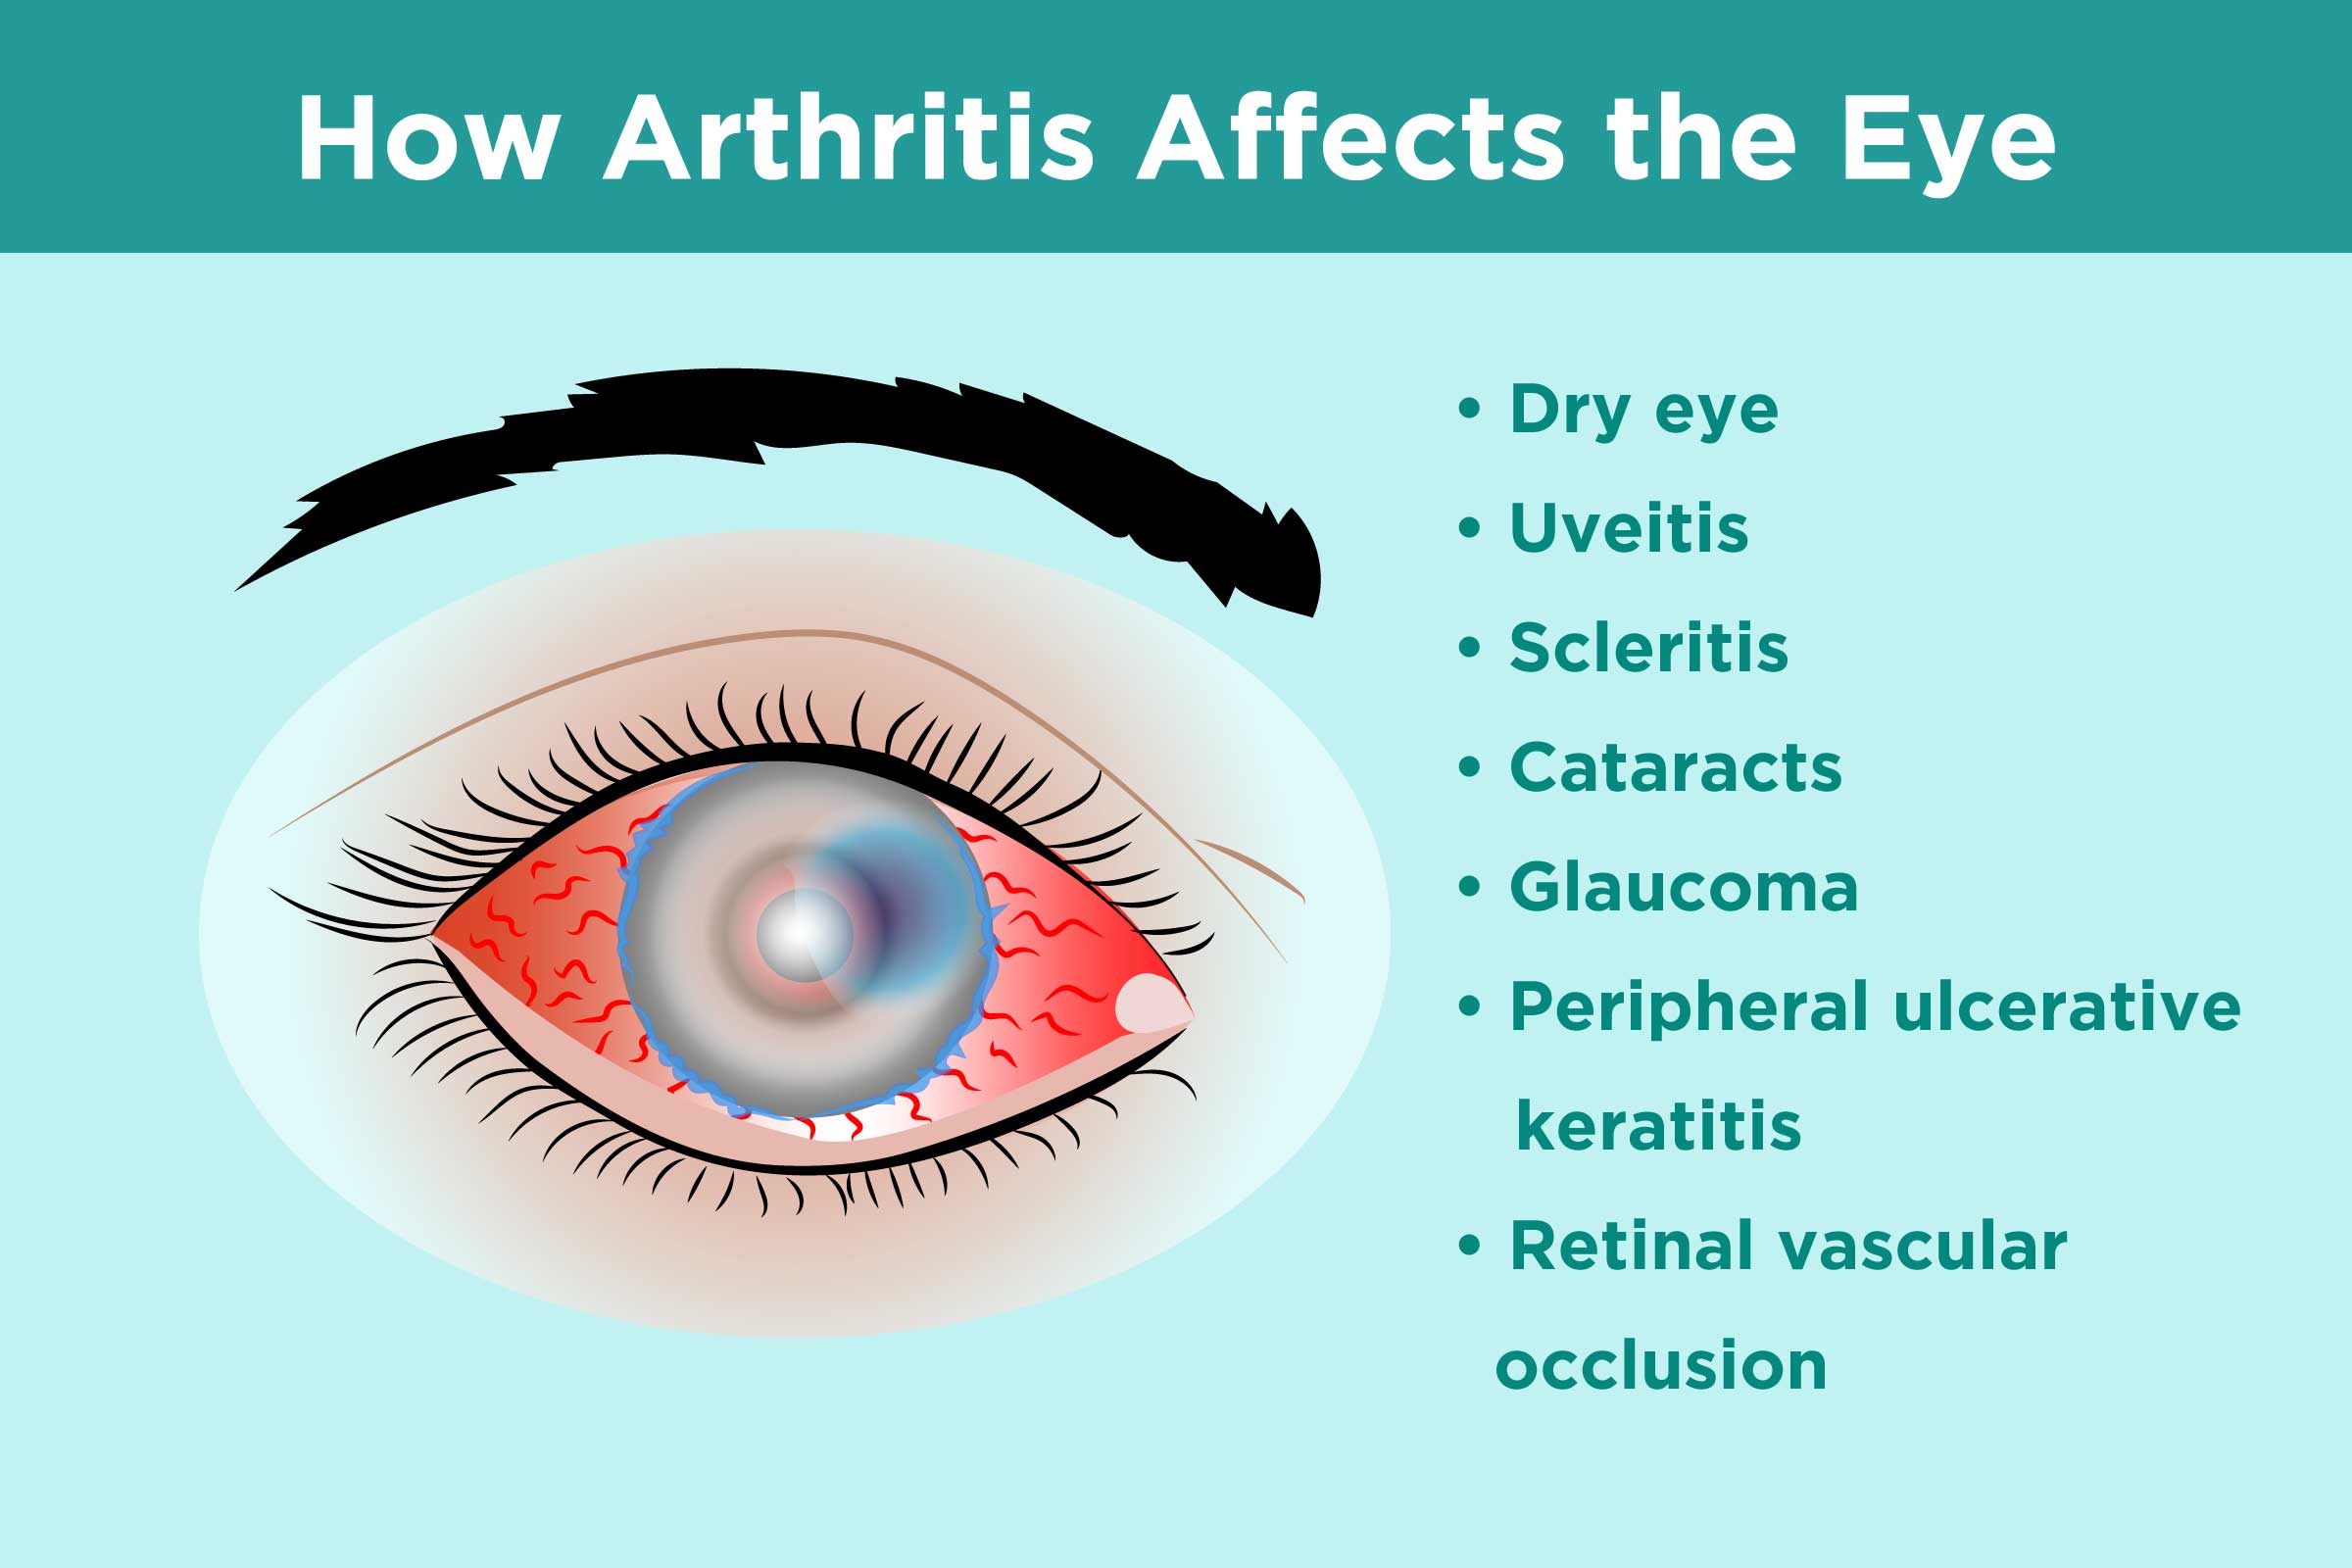 Common Eye Infections, Symptoms, Eye, Vision